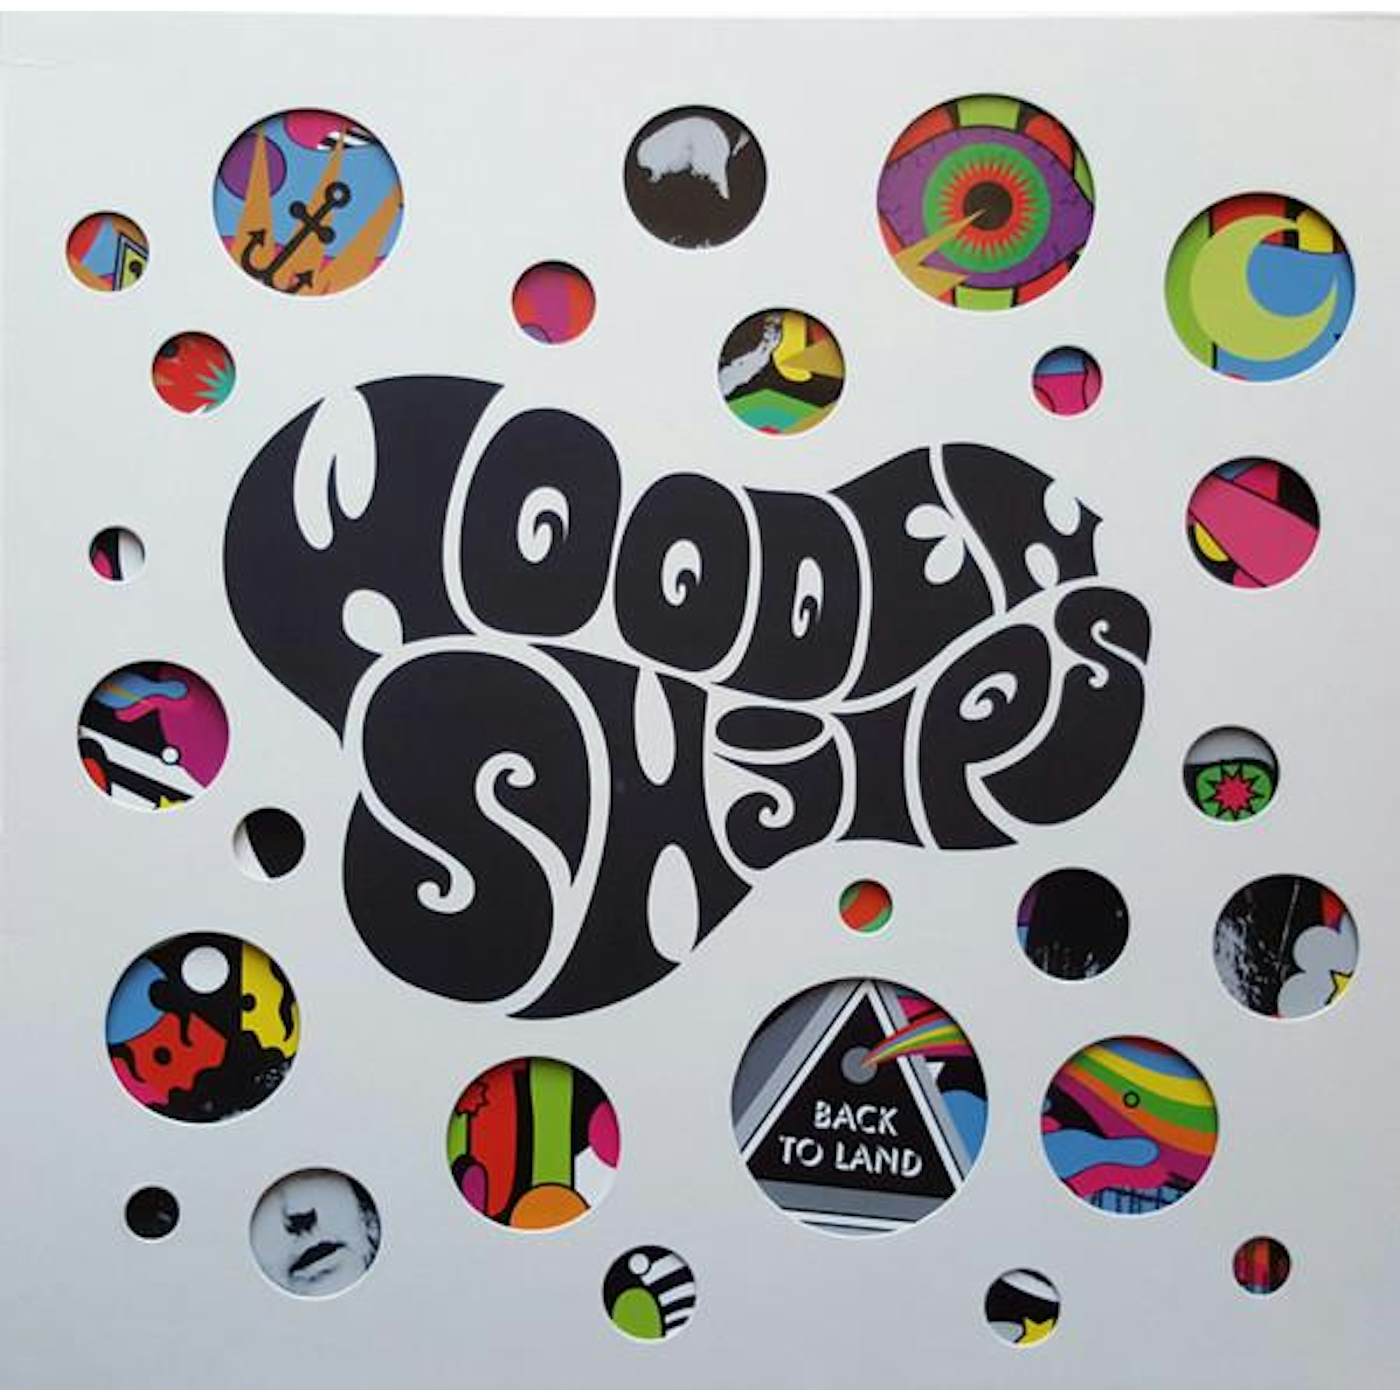 Wooden Shjips Back to Land Vinyl Record